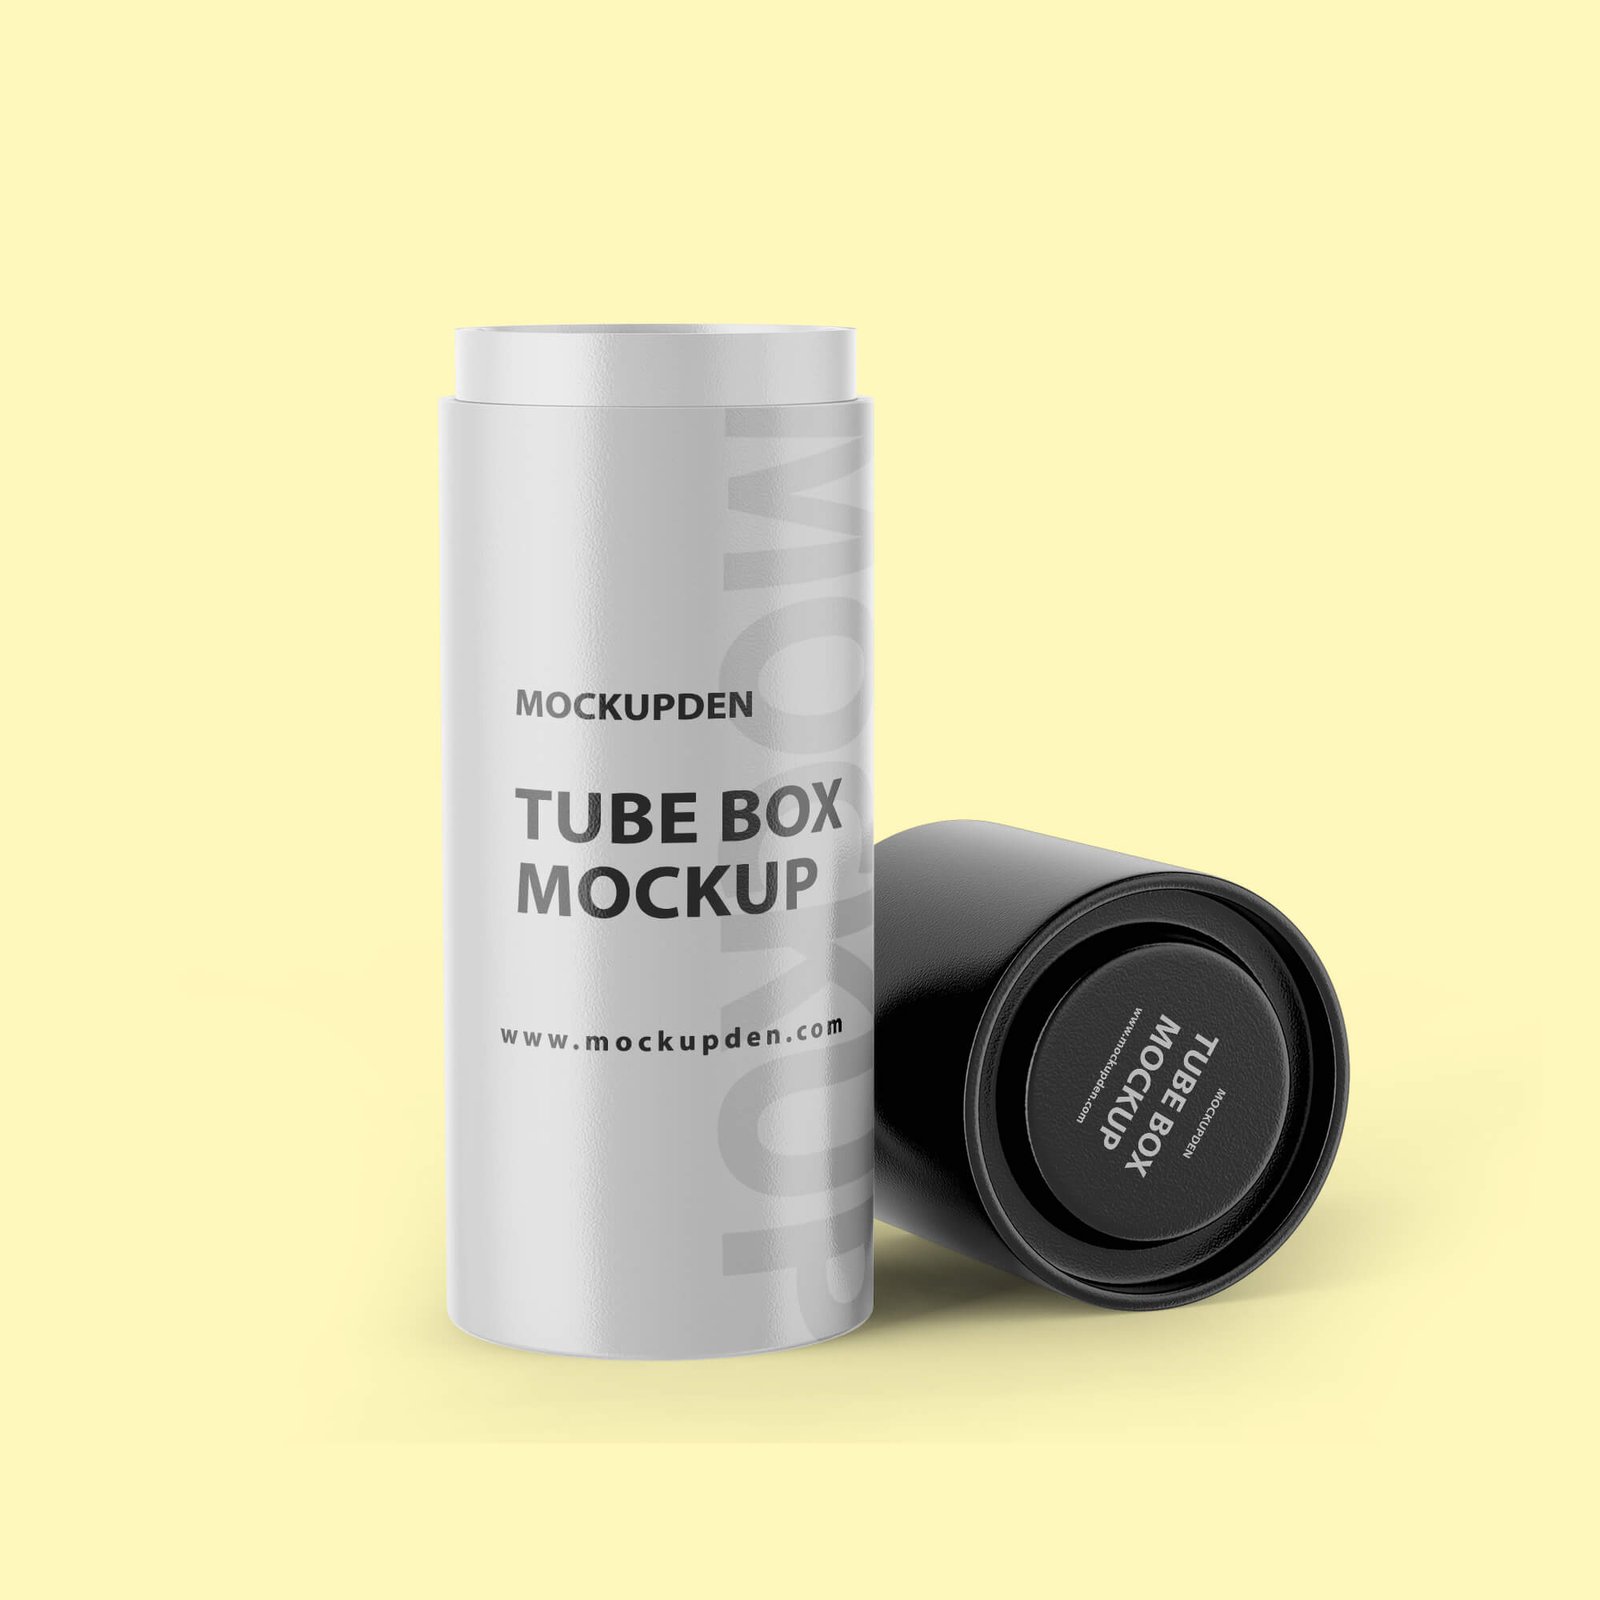 Design Free Tube Box Mockup PSD Template